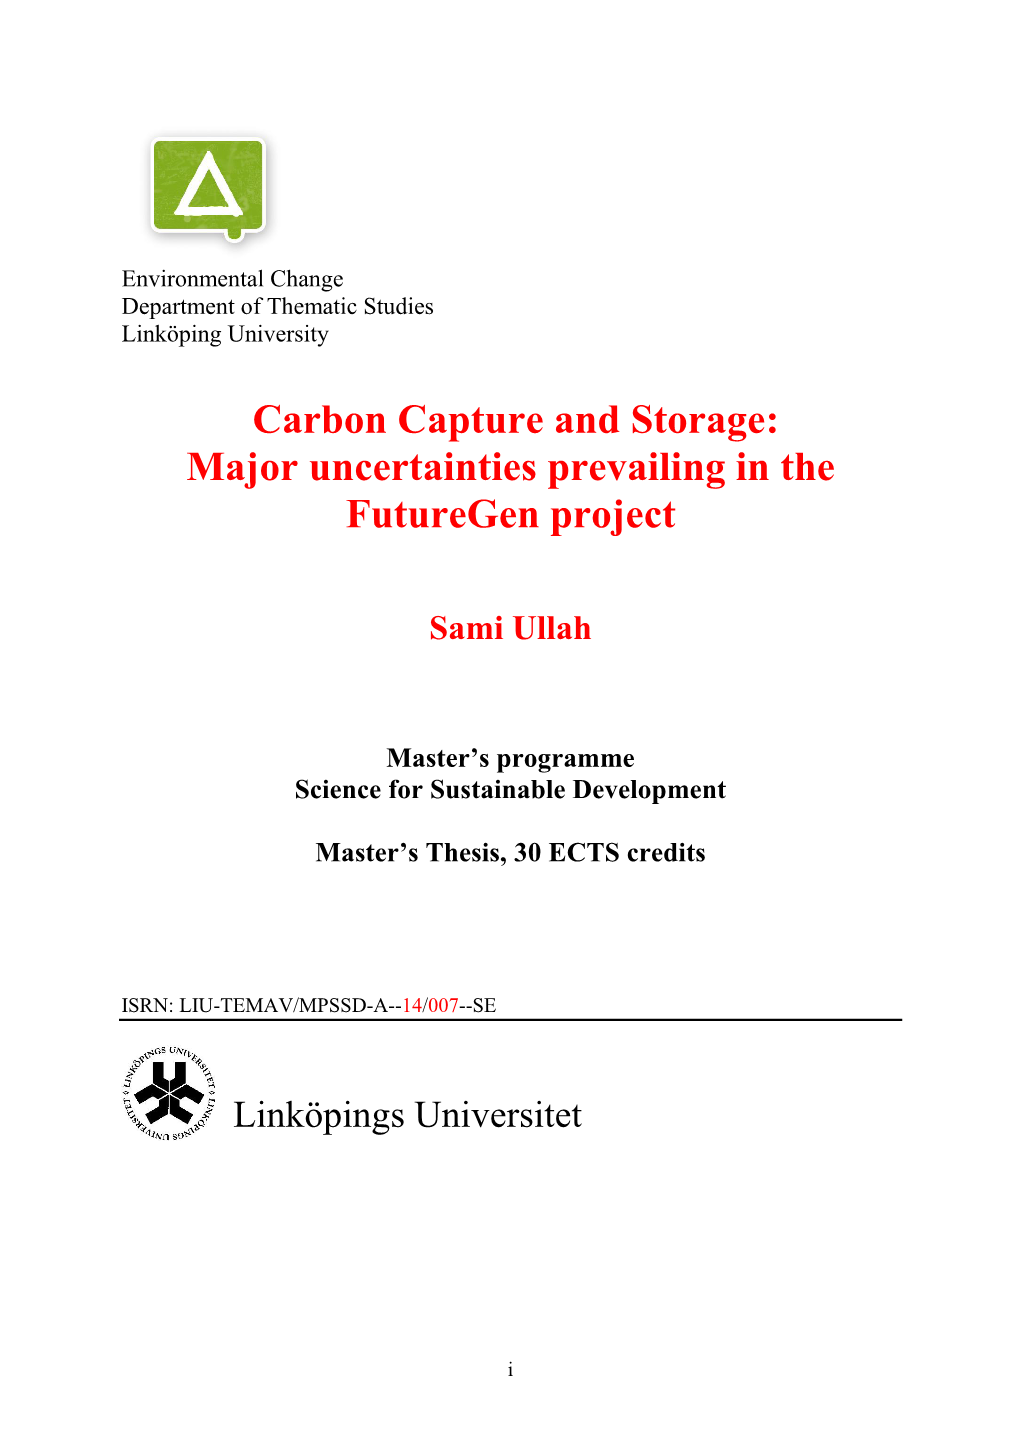 Carbon Capture and Storage: Major Uncertainties Prevailing in the Futuregen Project